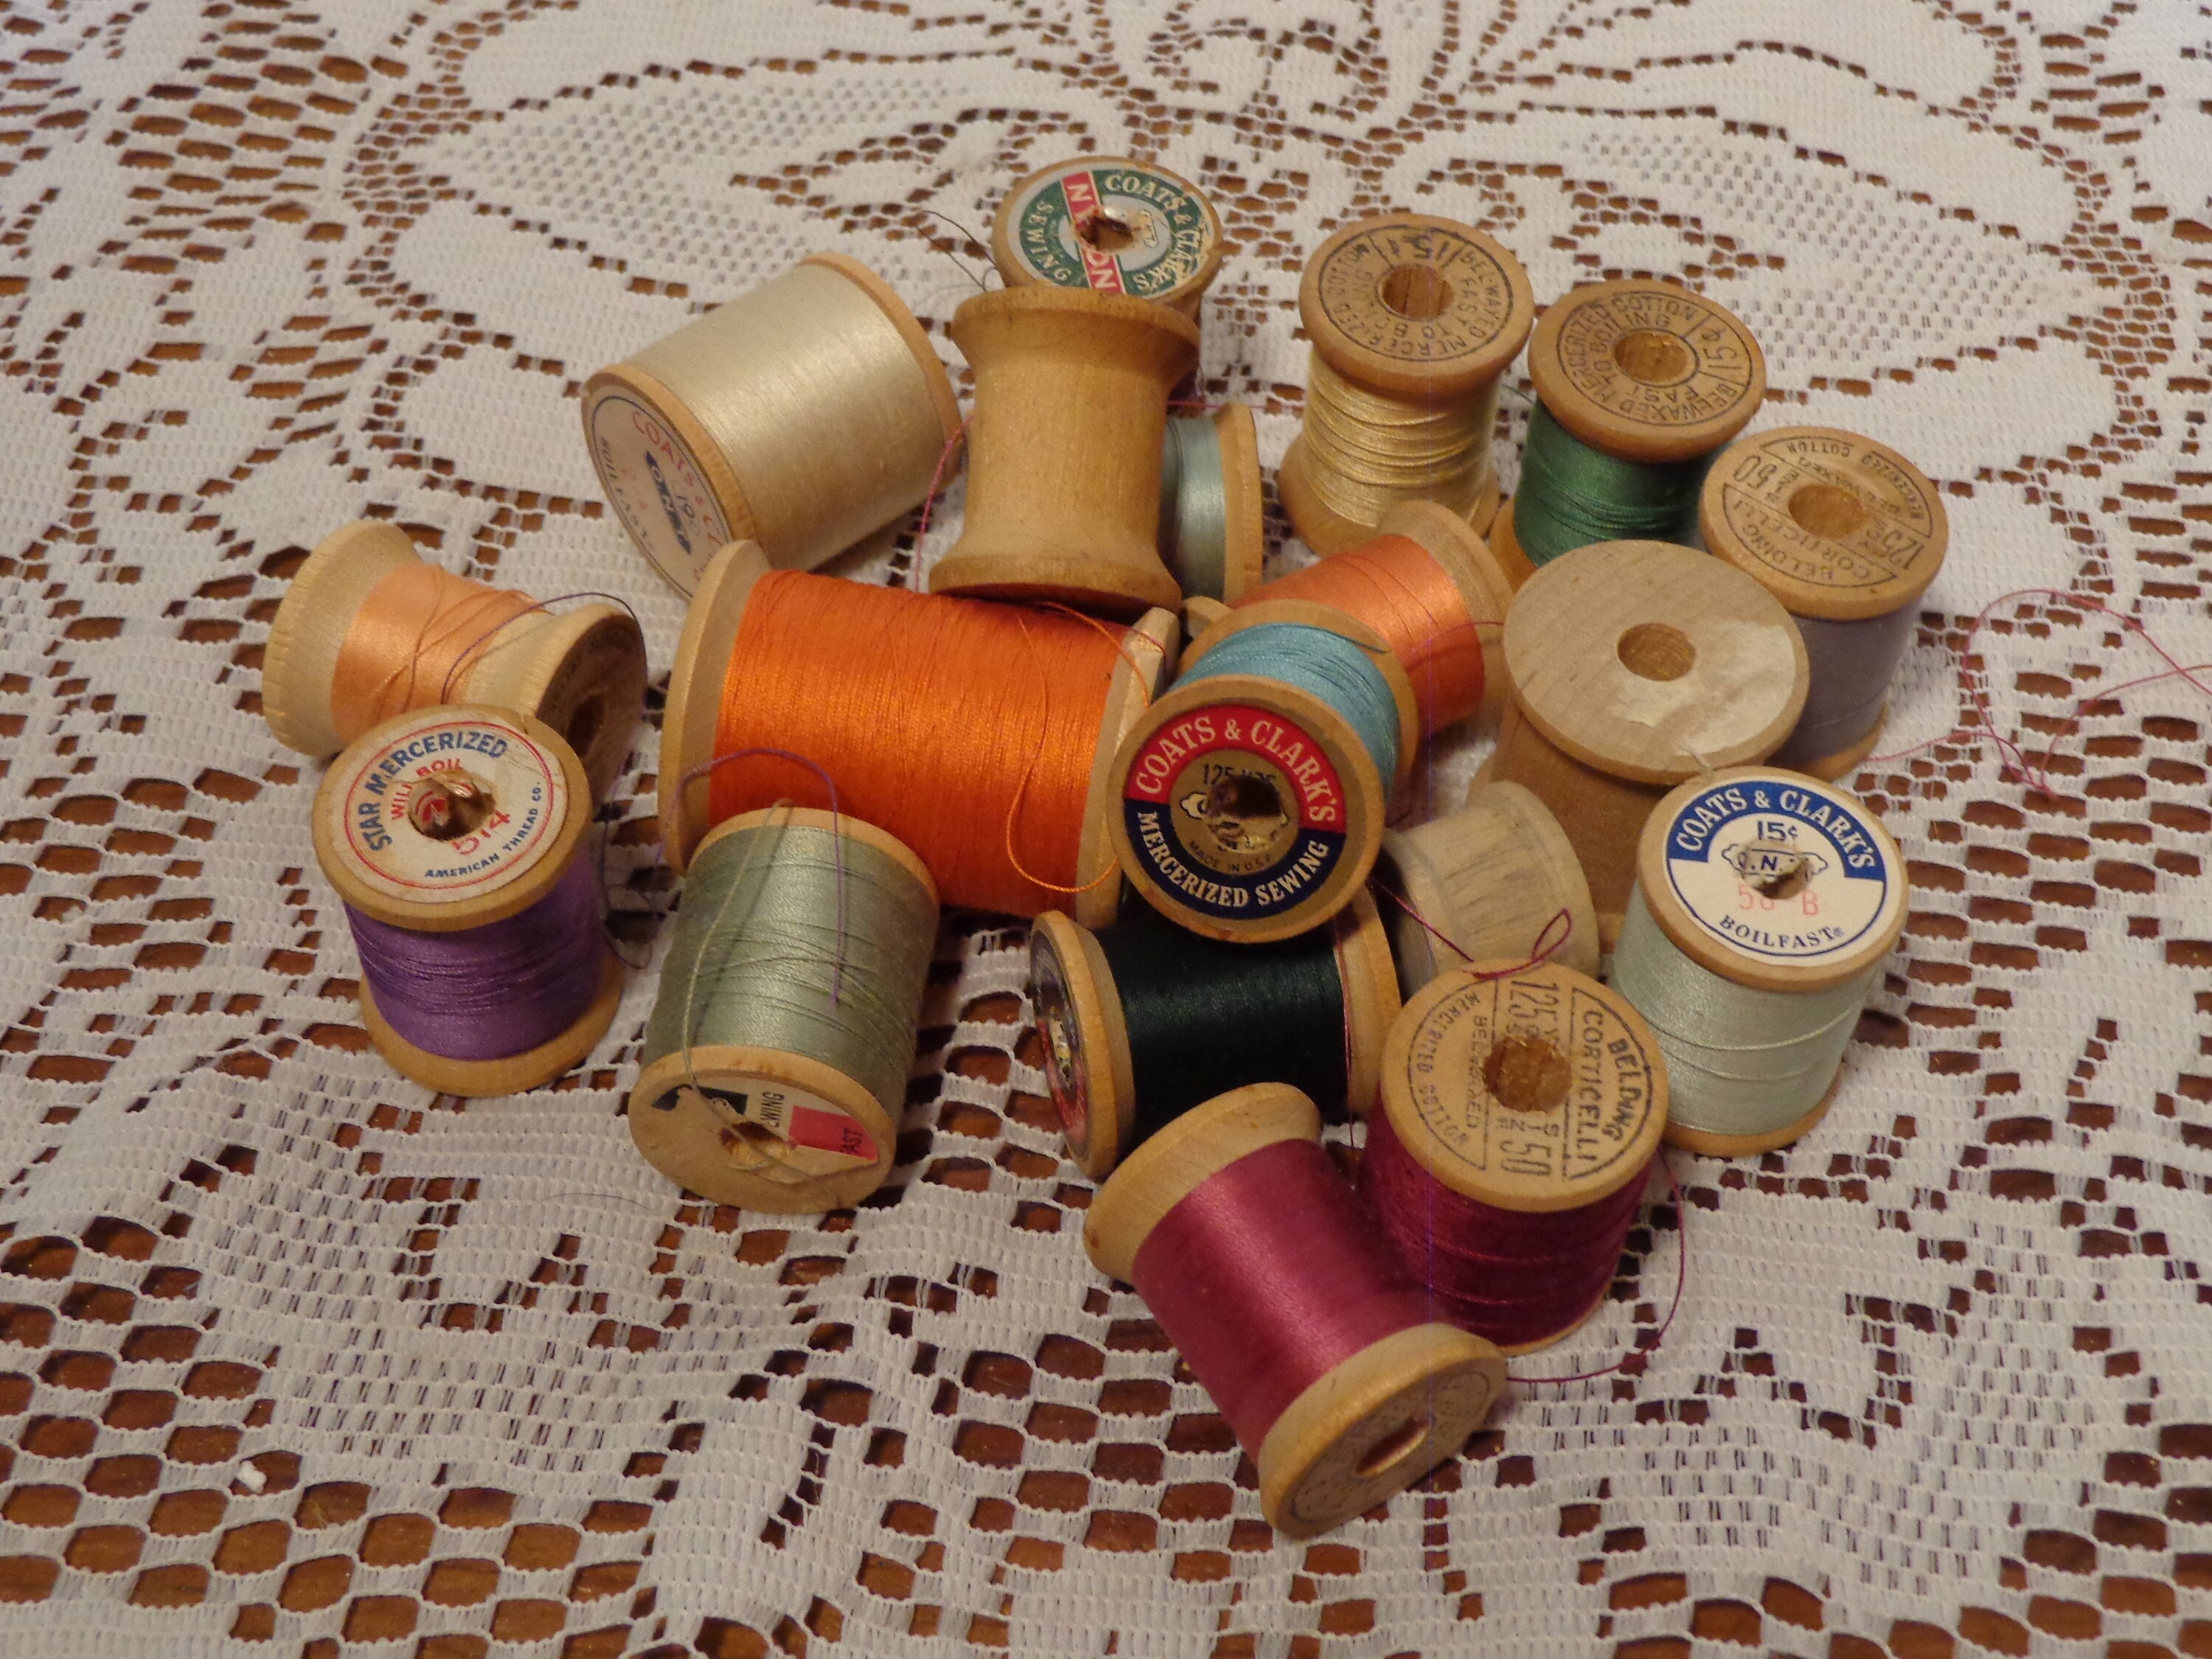 Vtg Sewing Thread Lot 26 Wood Spools Coats Clark Belding Corticelli  Mercerized – 北木健身